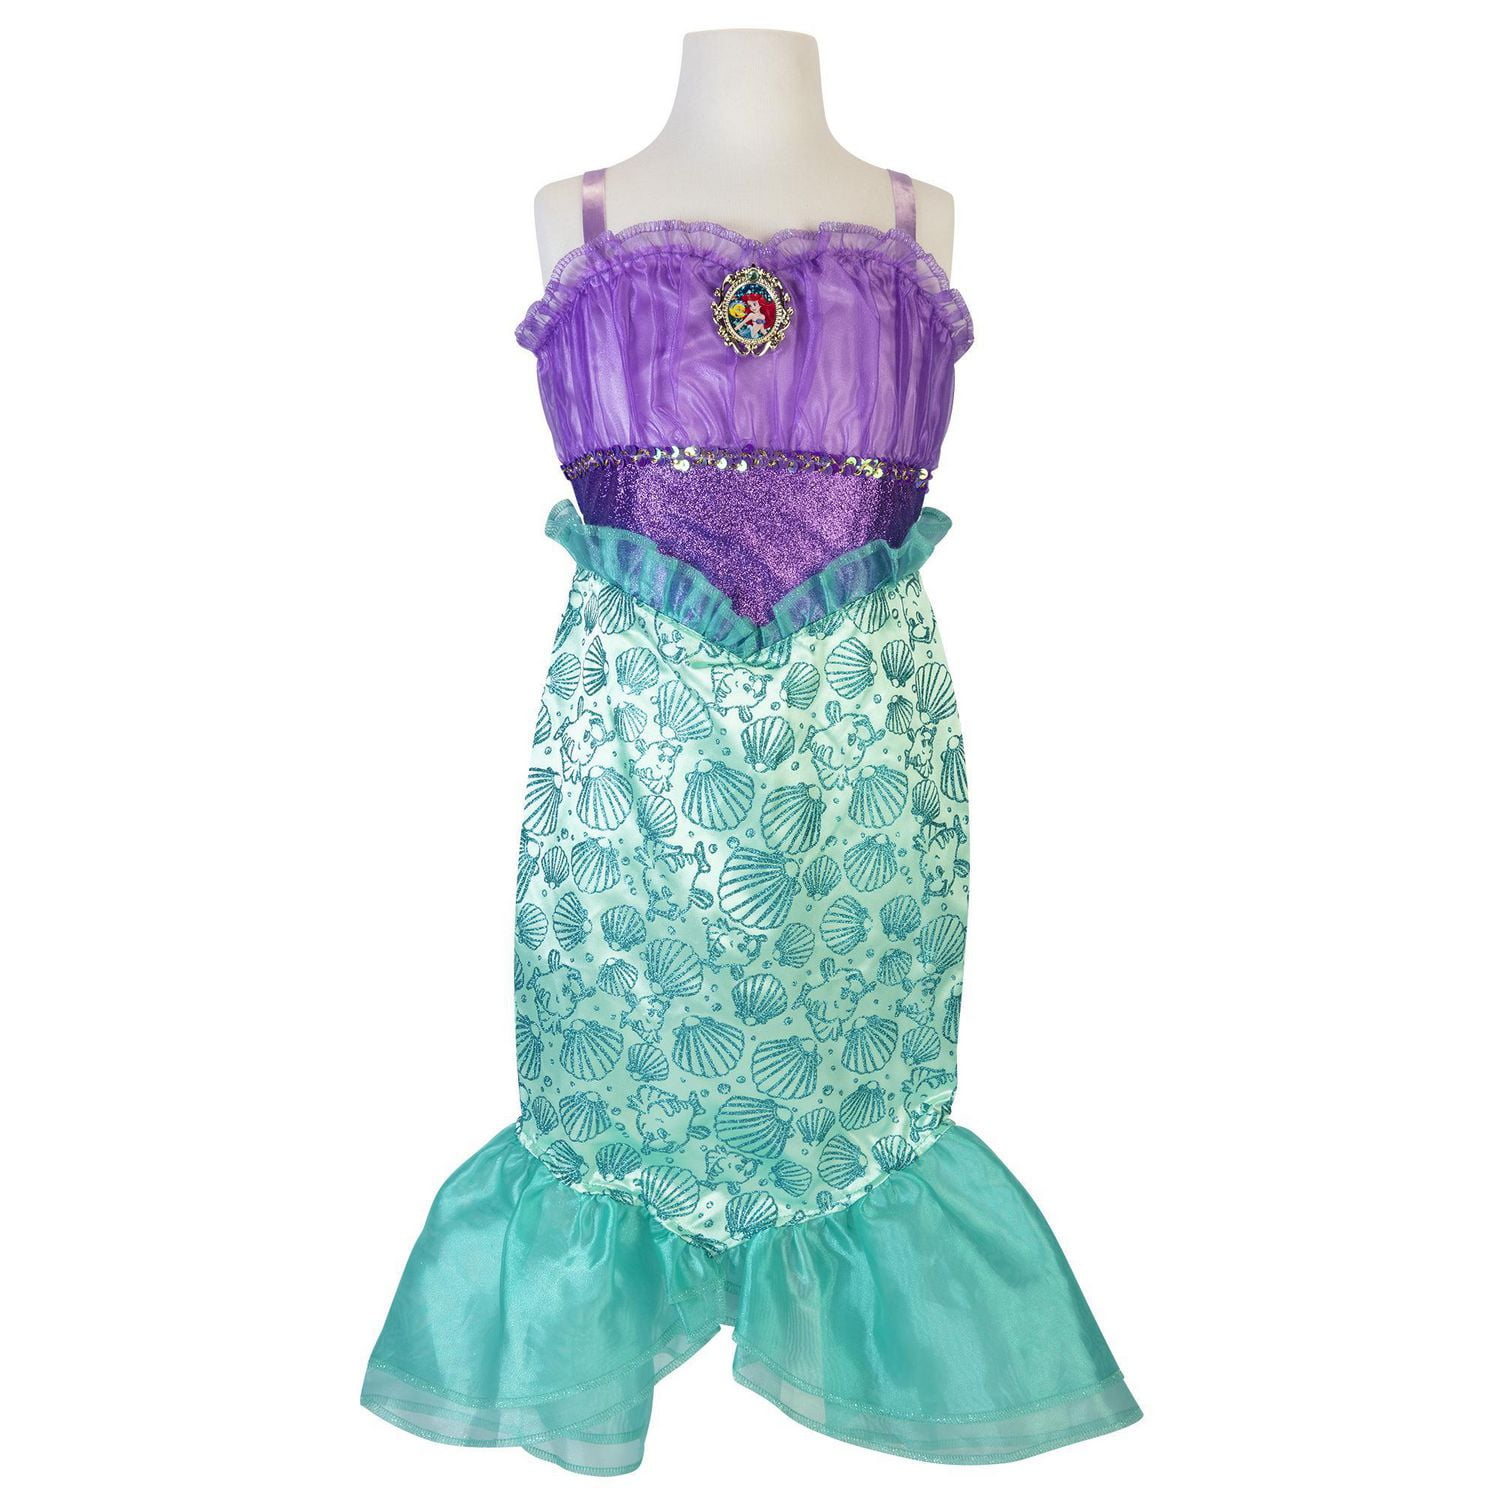 Disney Princess Ariel's Dress